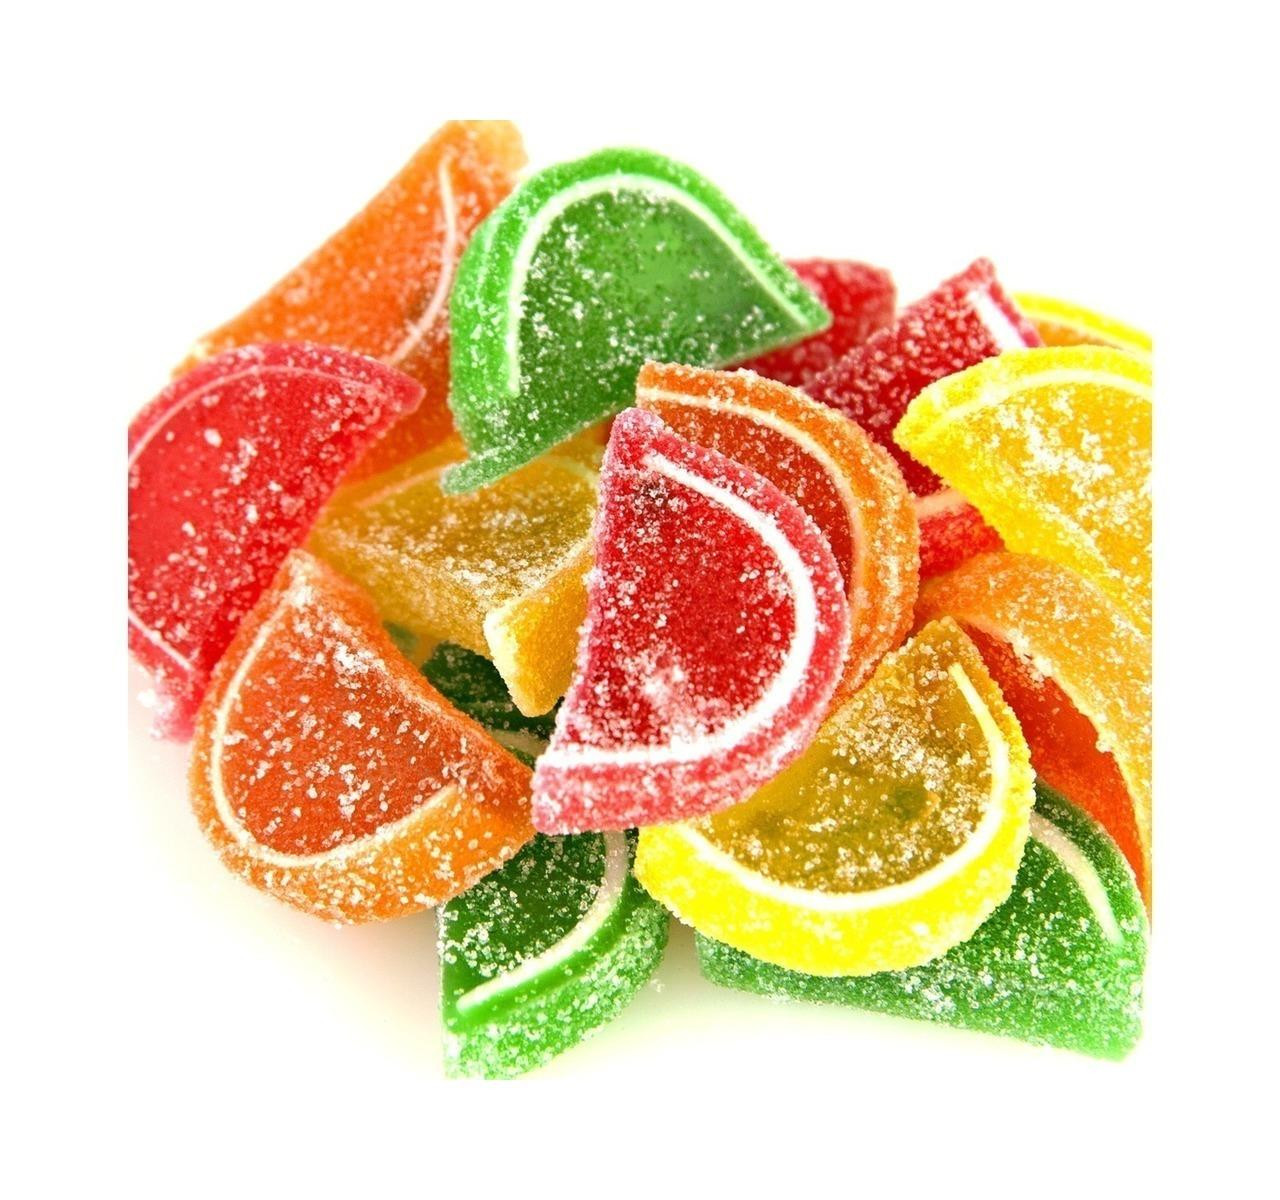 Mini Jelly Fruit Slices